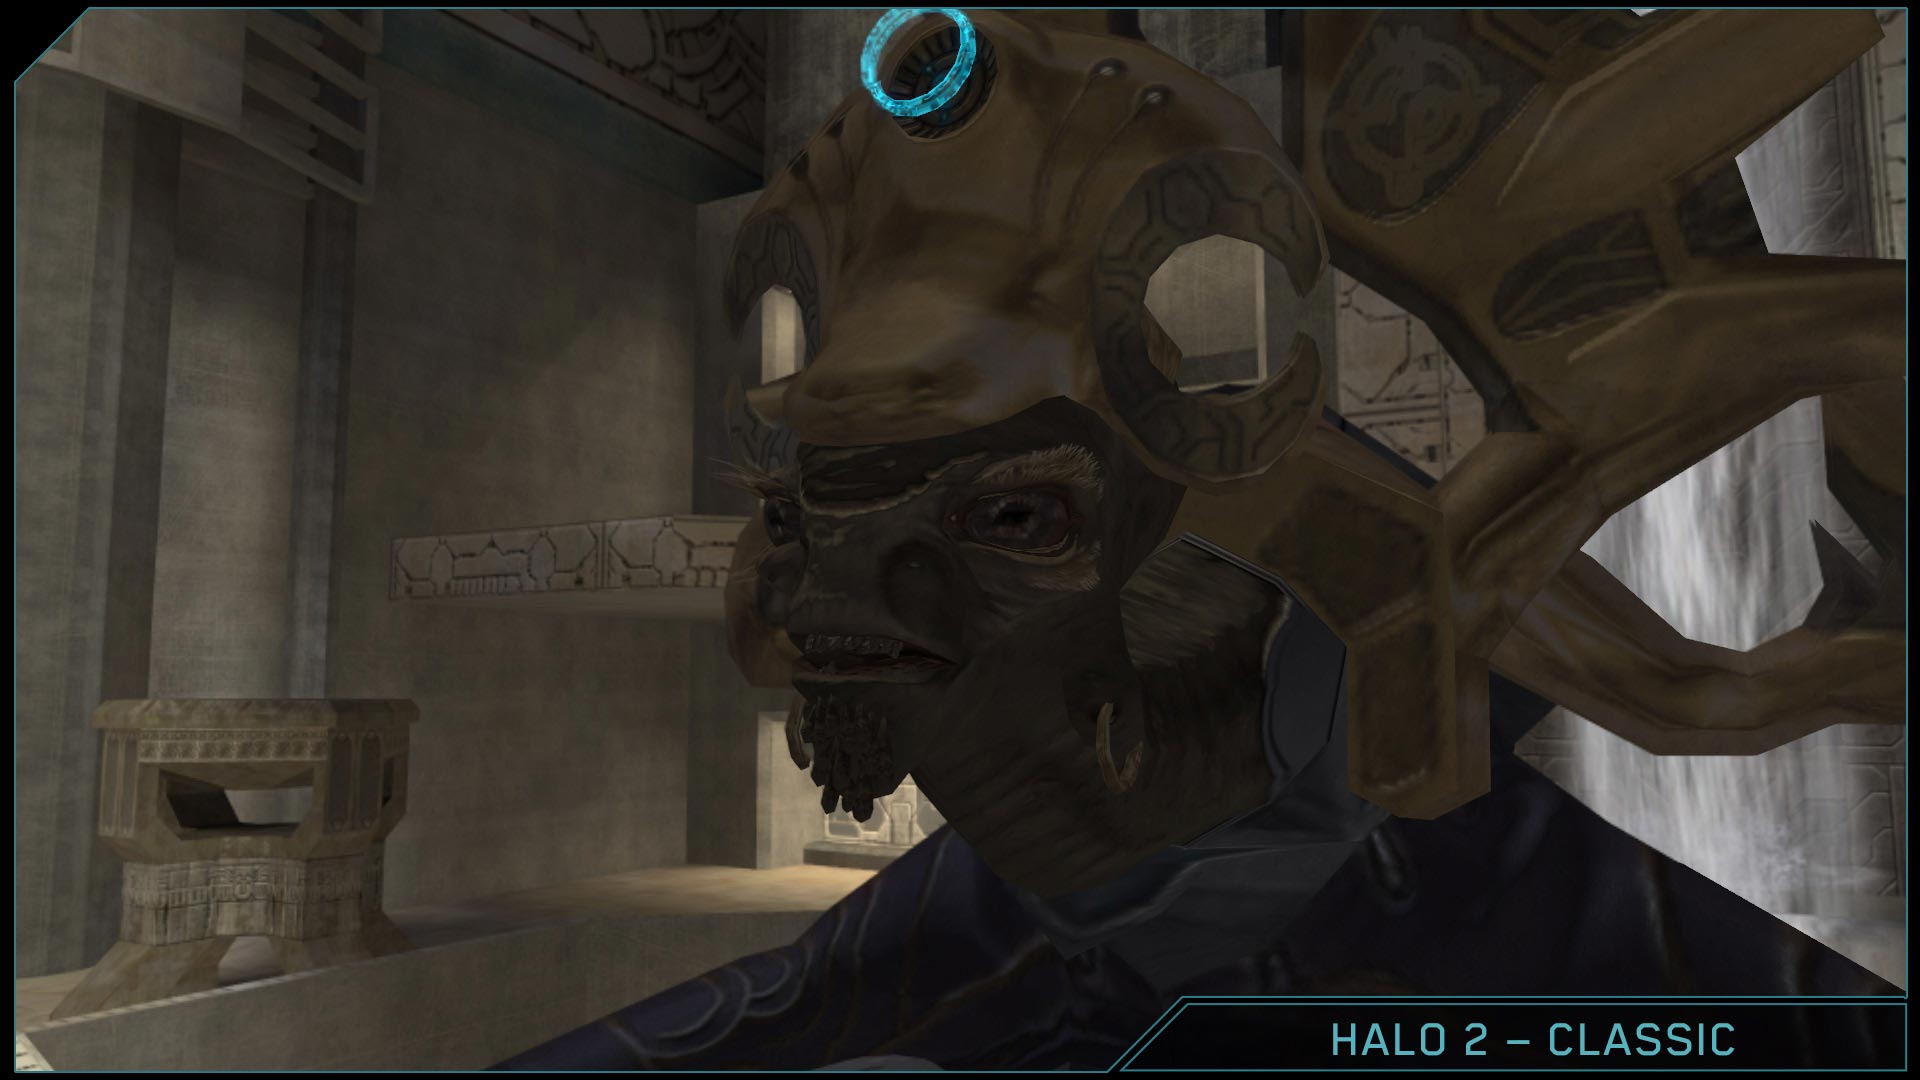 halo 2 classic screenshot 5 تصاویر چشم نواز جدیدی با کیفیت 1080p از Halo: The Master Chief Collection منتشر شد